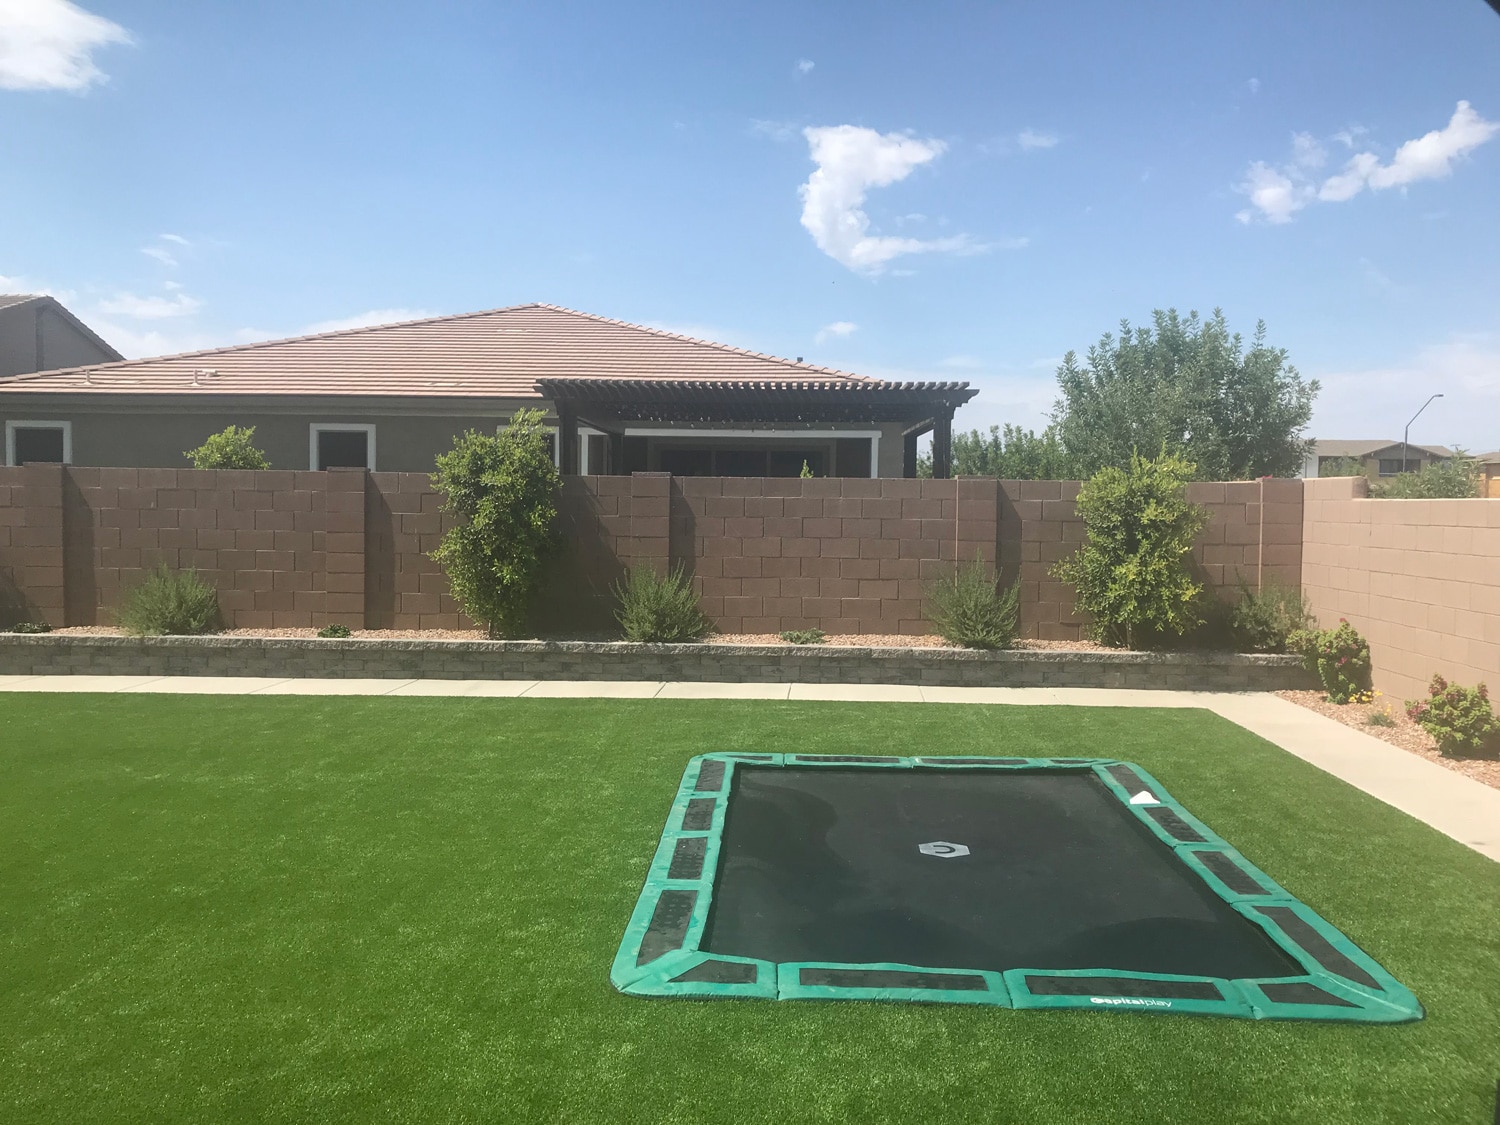 Rear view of backyard in-ground trampoline installed